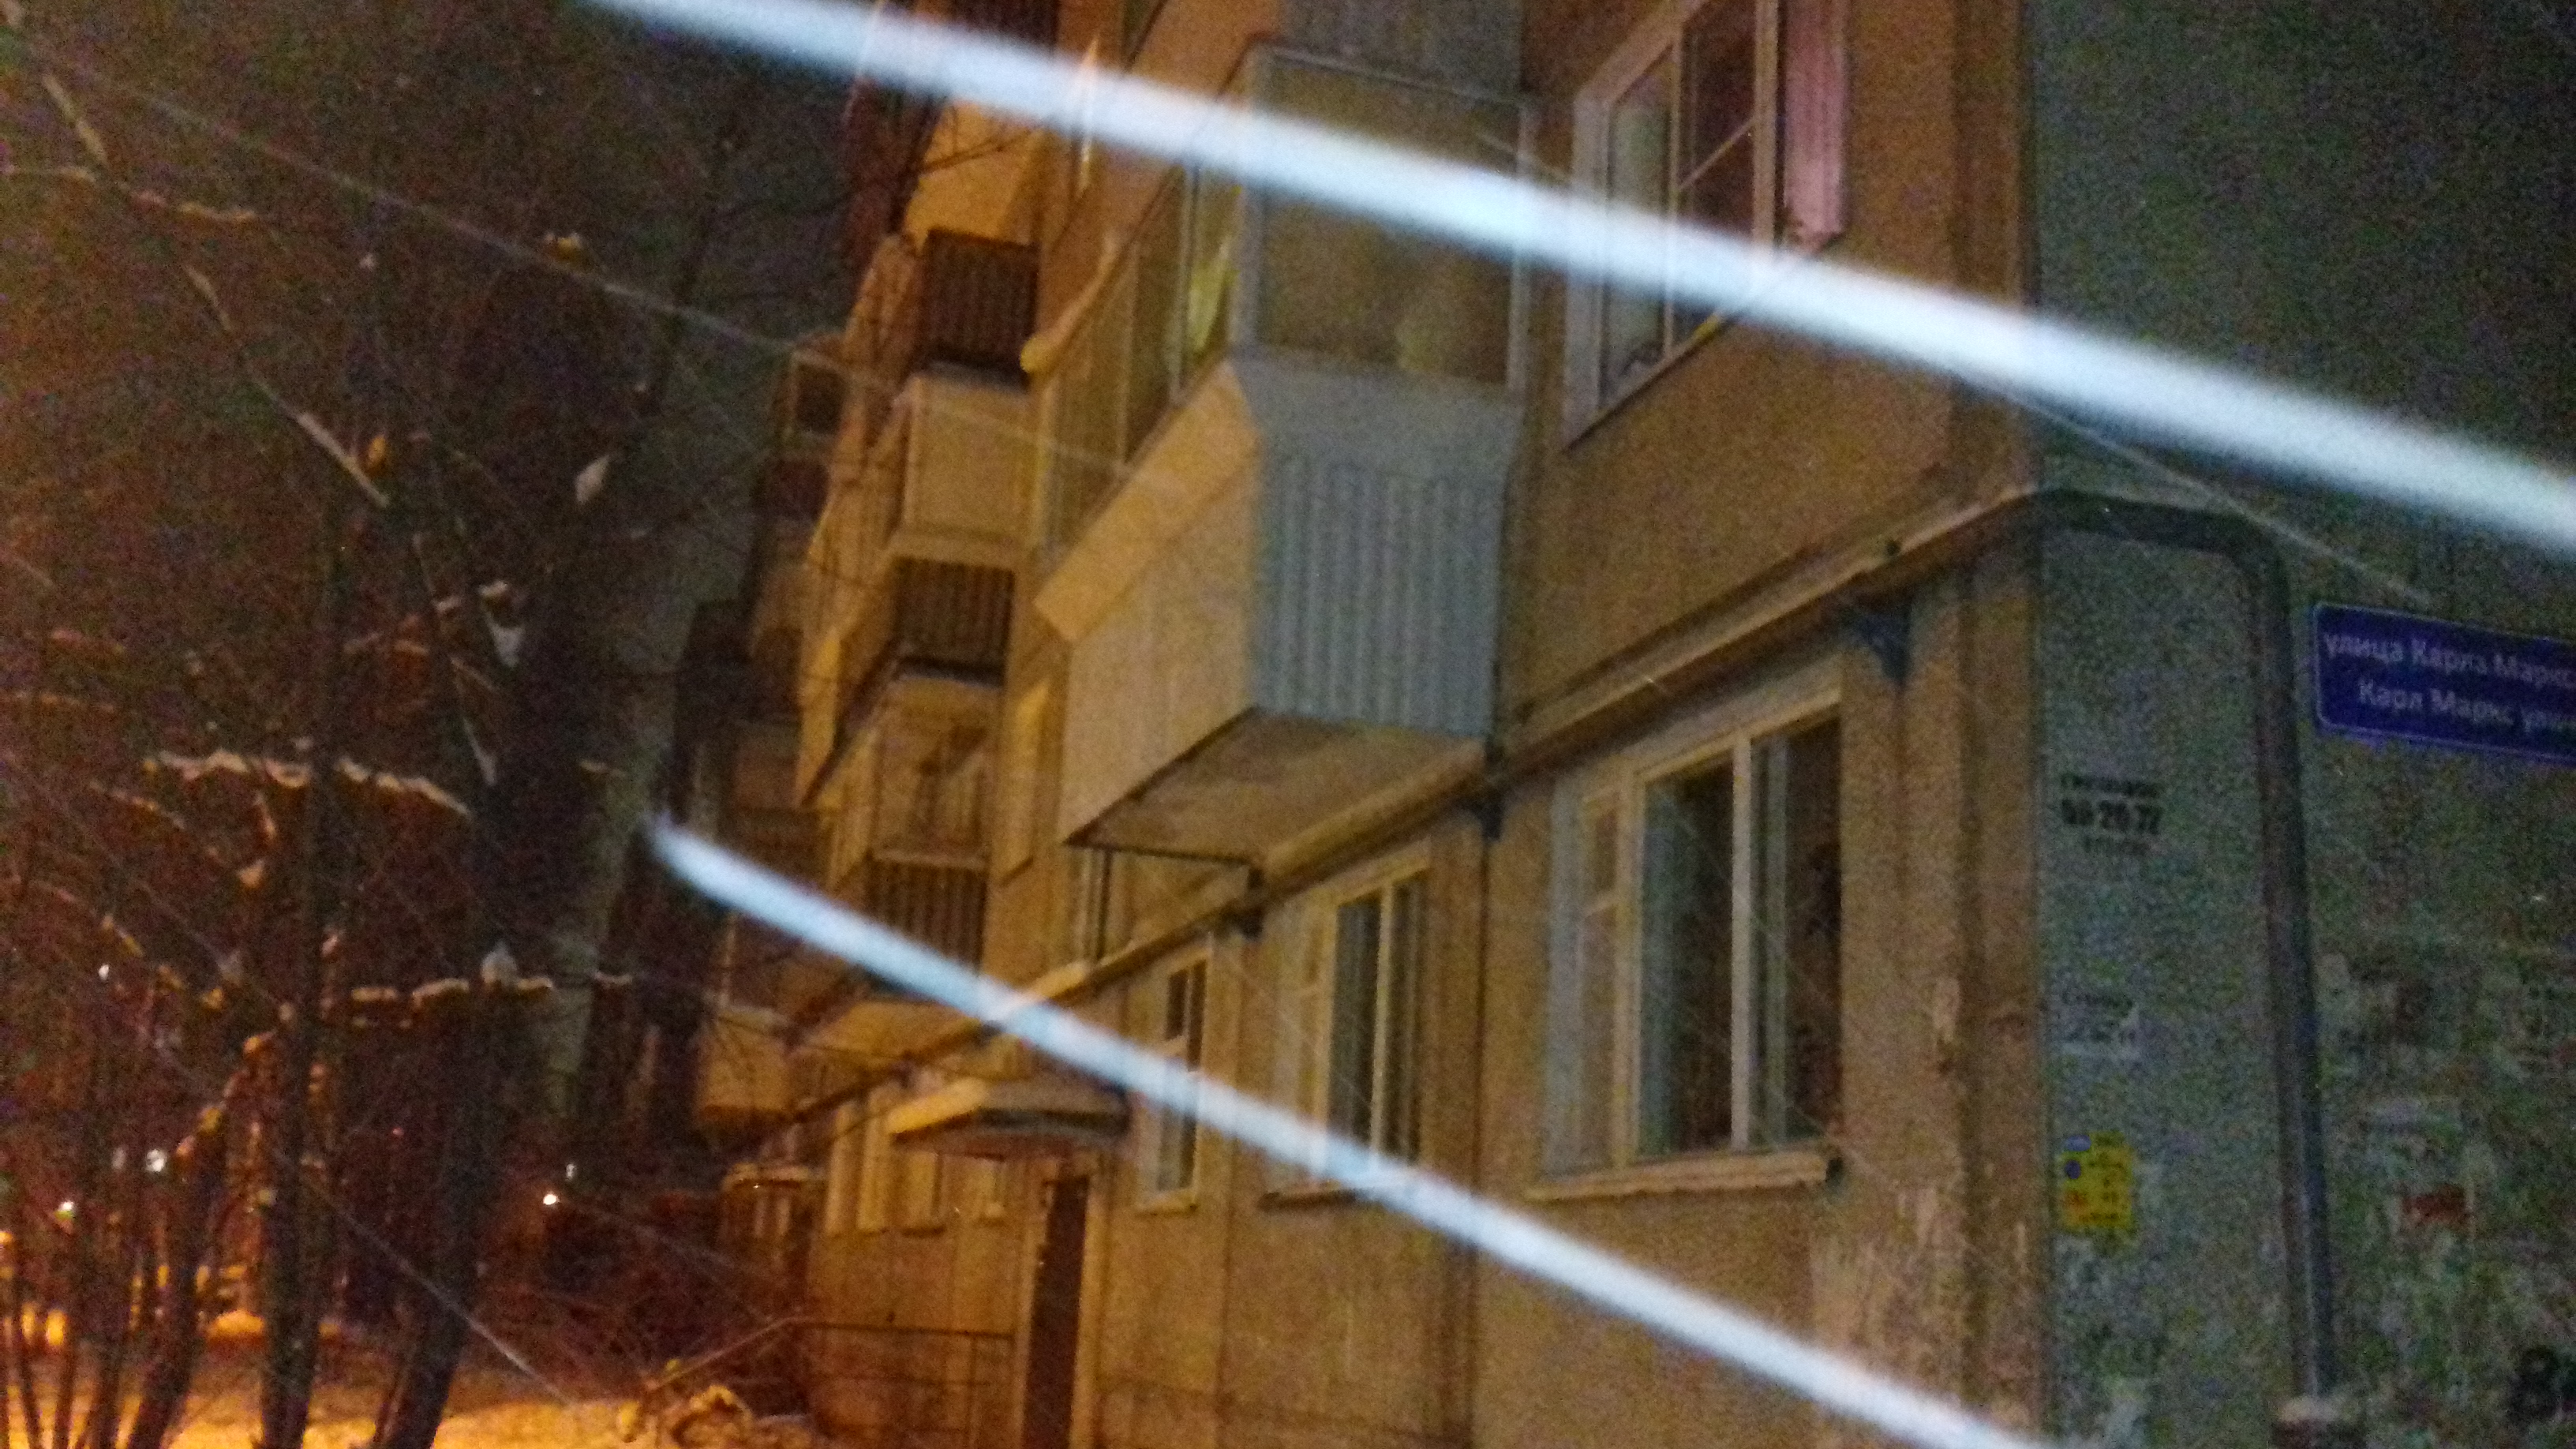 Респ. Коми, г. Сыктывкар, ул. Карла Маркса, д. 164-фасад здания